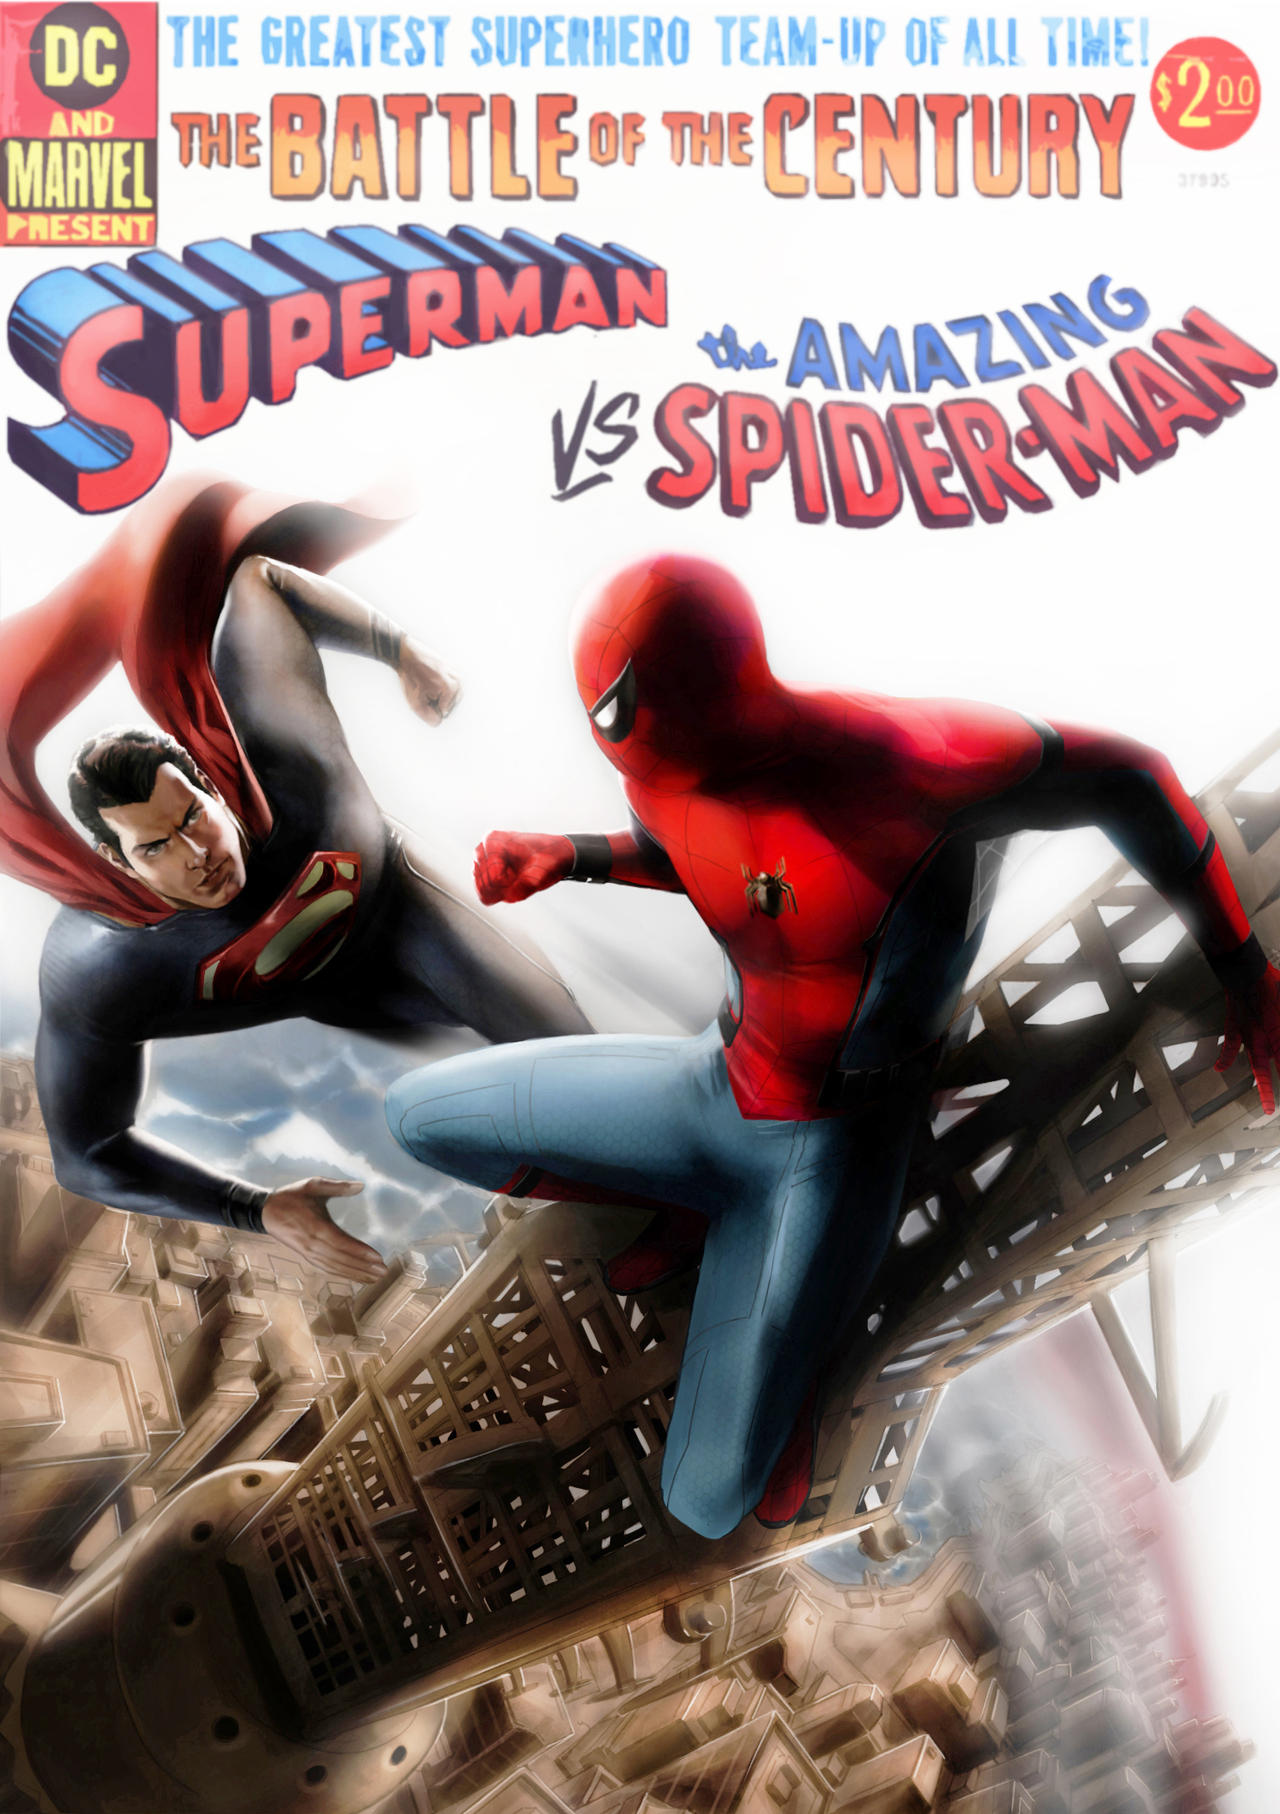 Superman Vs Spiderman by CHUBETO on DeviantArt